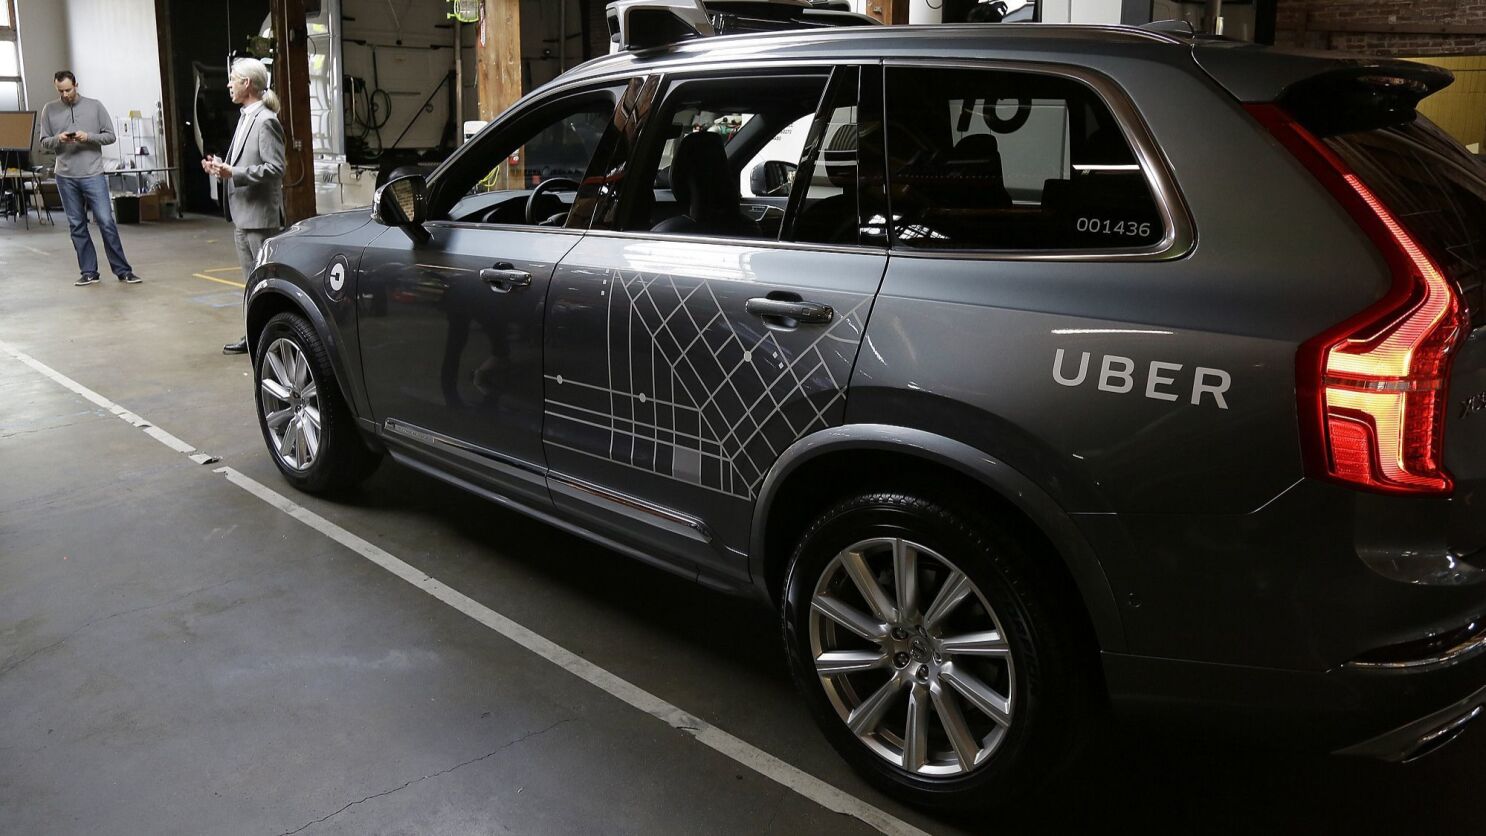 An Uber car kills a pedestrian Arizona. Will it slow driverless tests? - Los Angeles Times